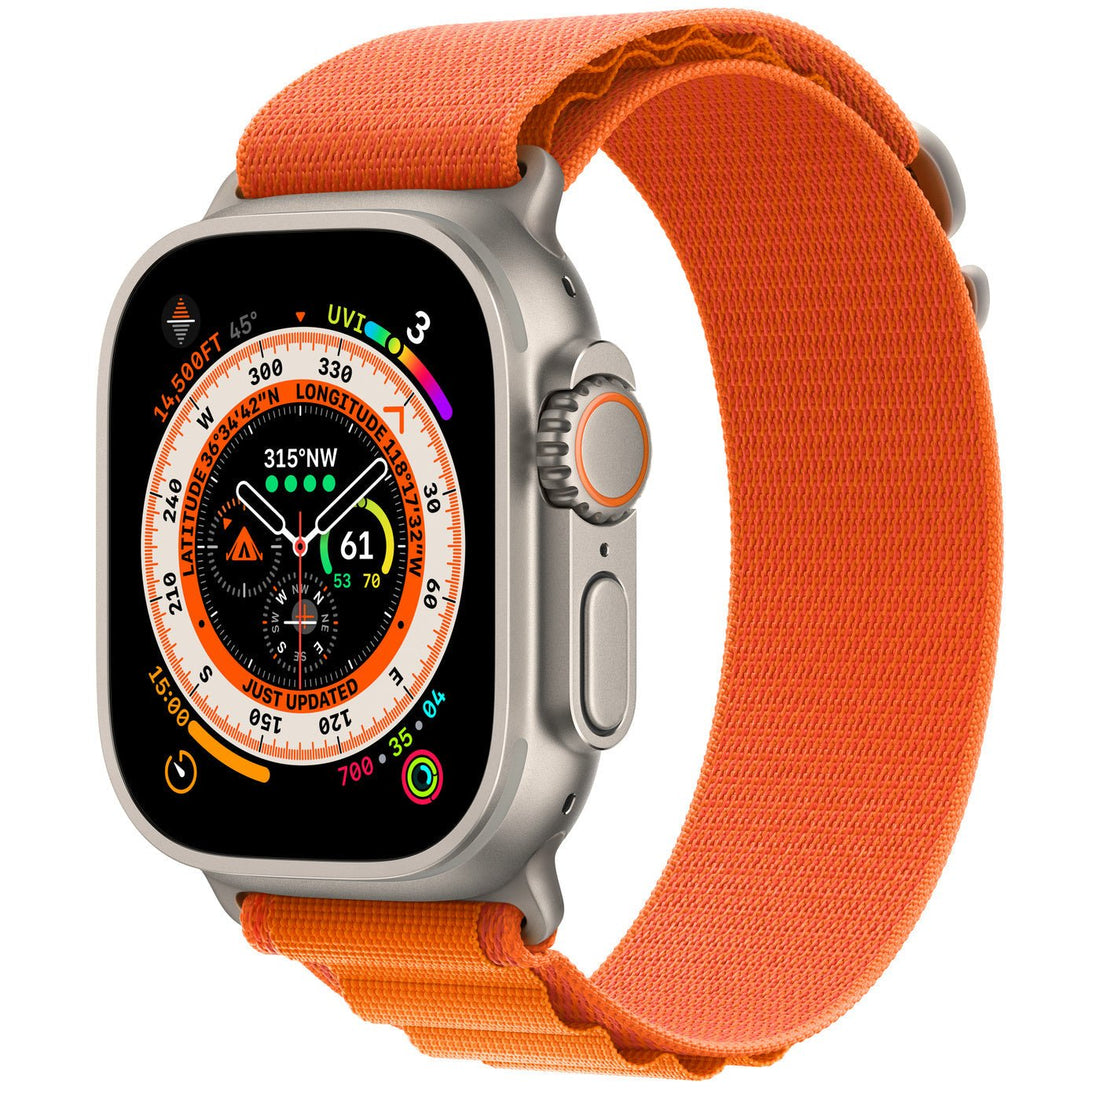 Advanced Apple Watch Features - Maxandfix